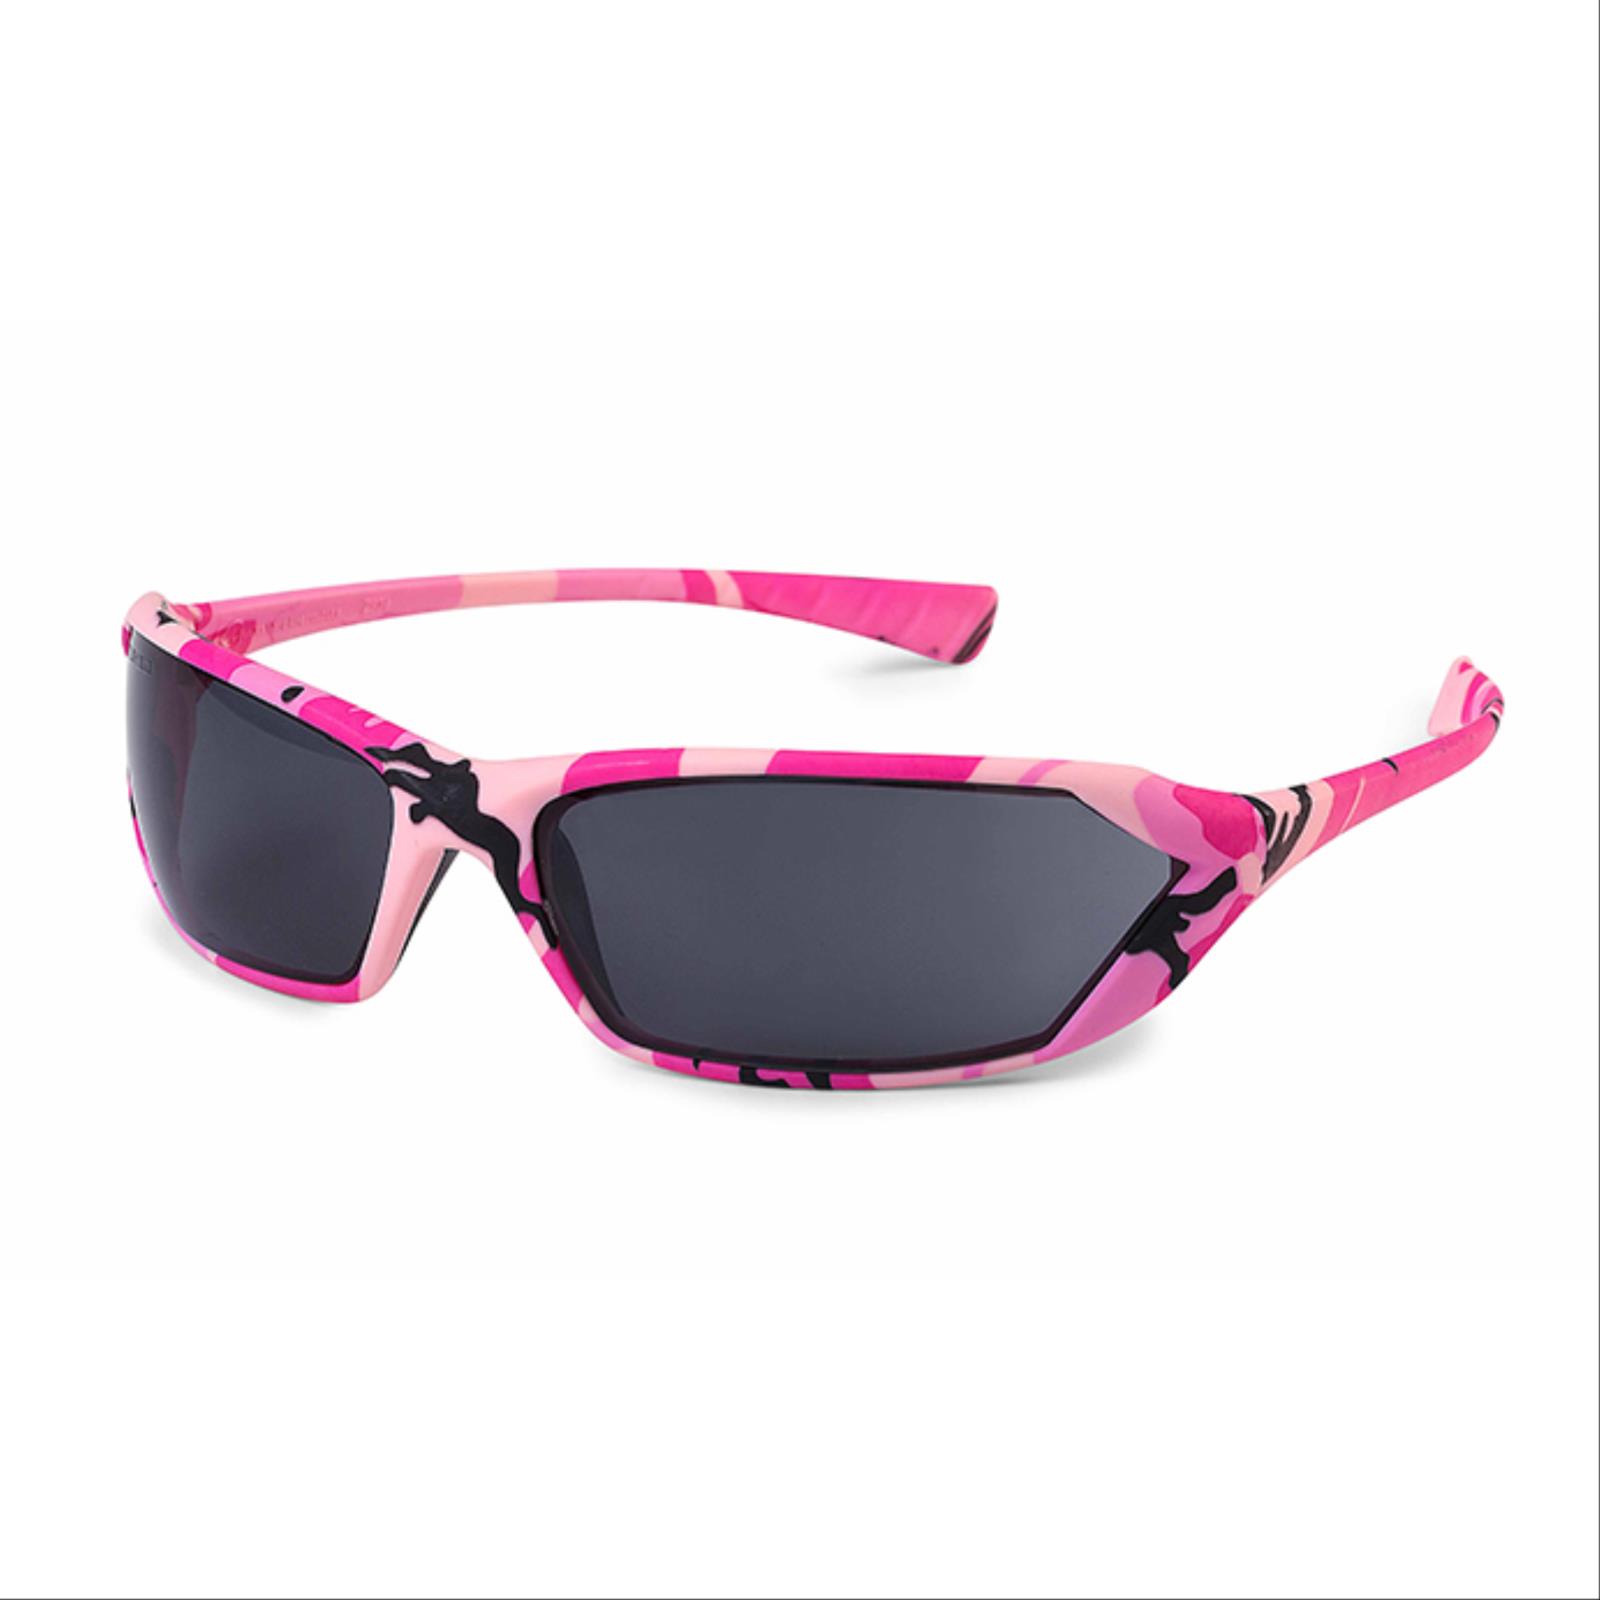 GirlzGear® Metro™ Eyewear for Women, Camo Pink